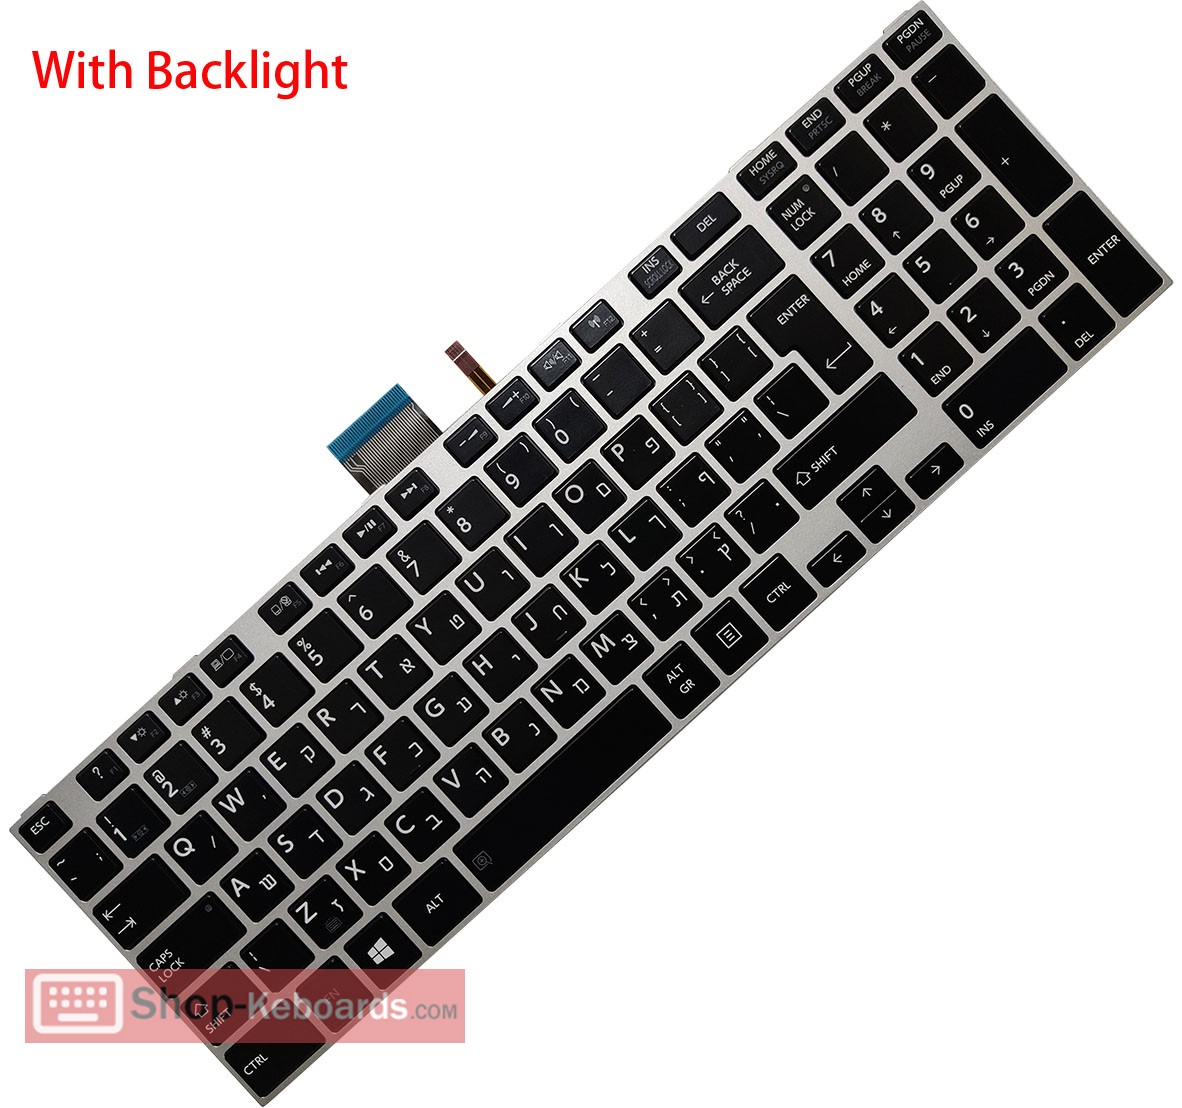 Toshiba Satellite L70D-B Keyboard replacement